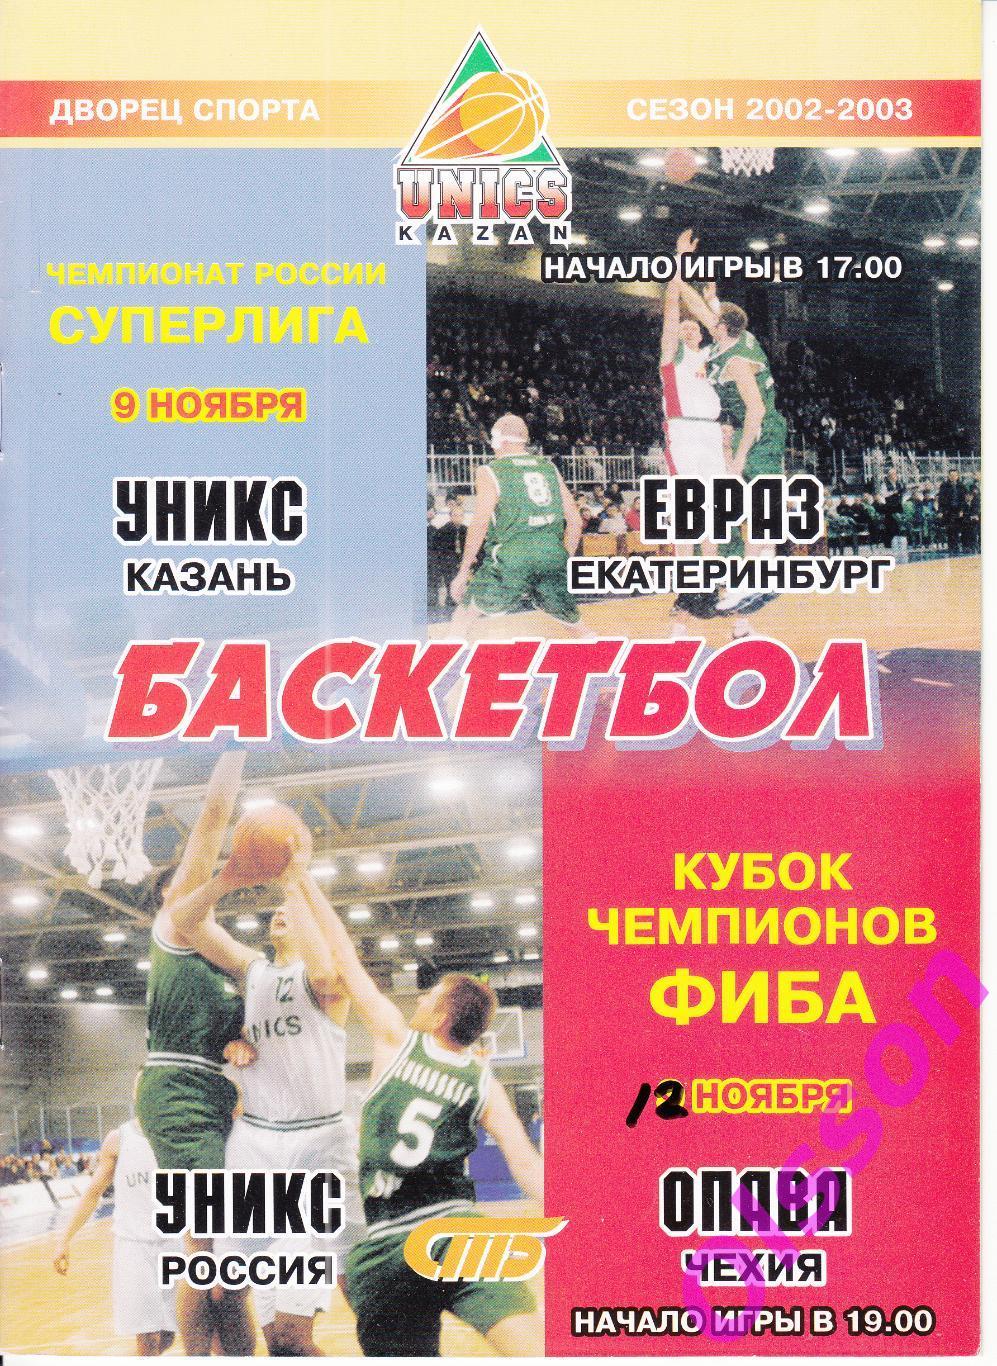 Баскетбол. УНИКС Казань - ЕВРАЗ Екатеринбург + Опава Чехия 2002 Евролига *